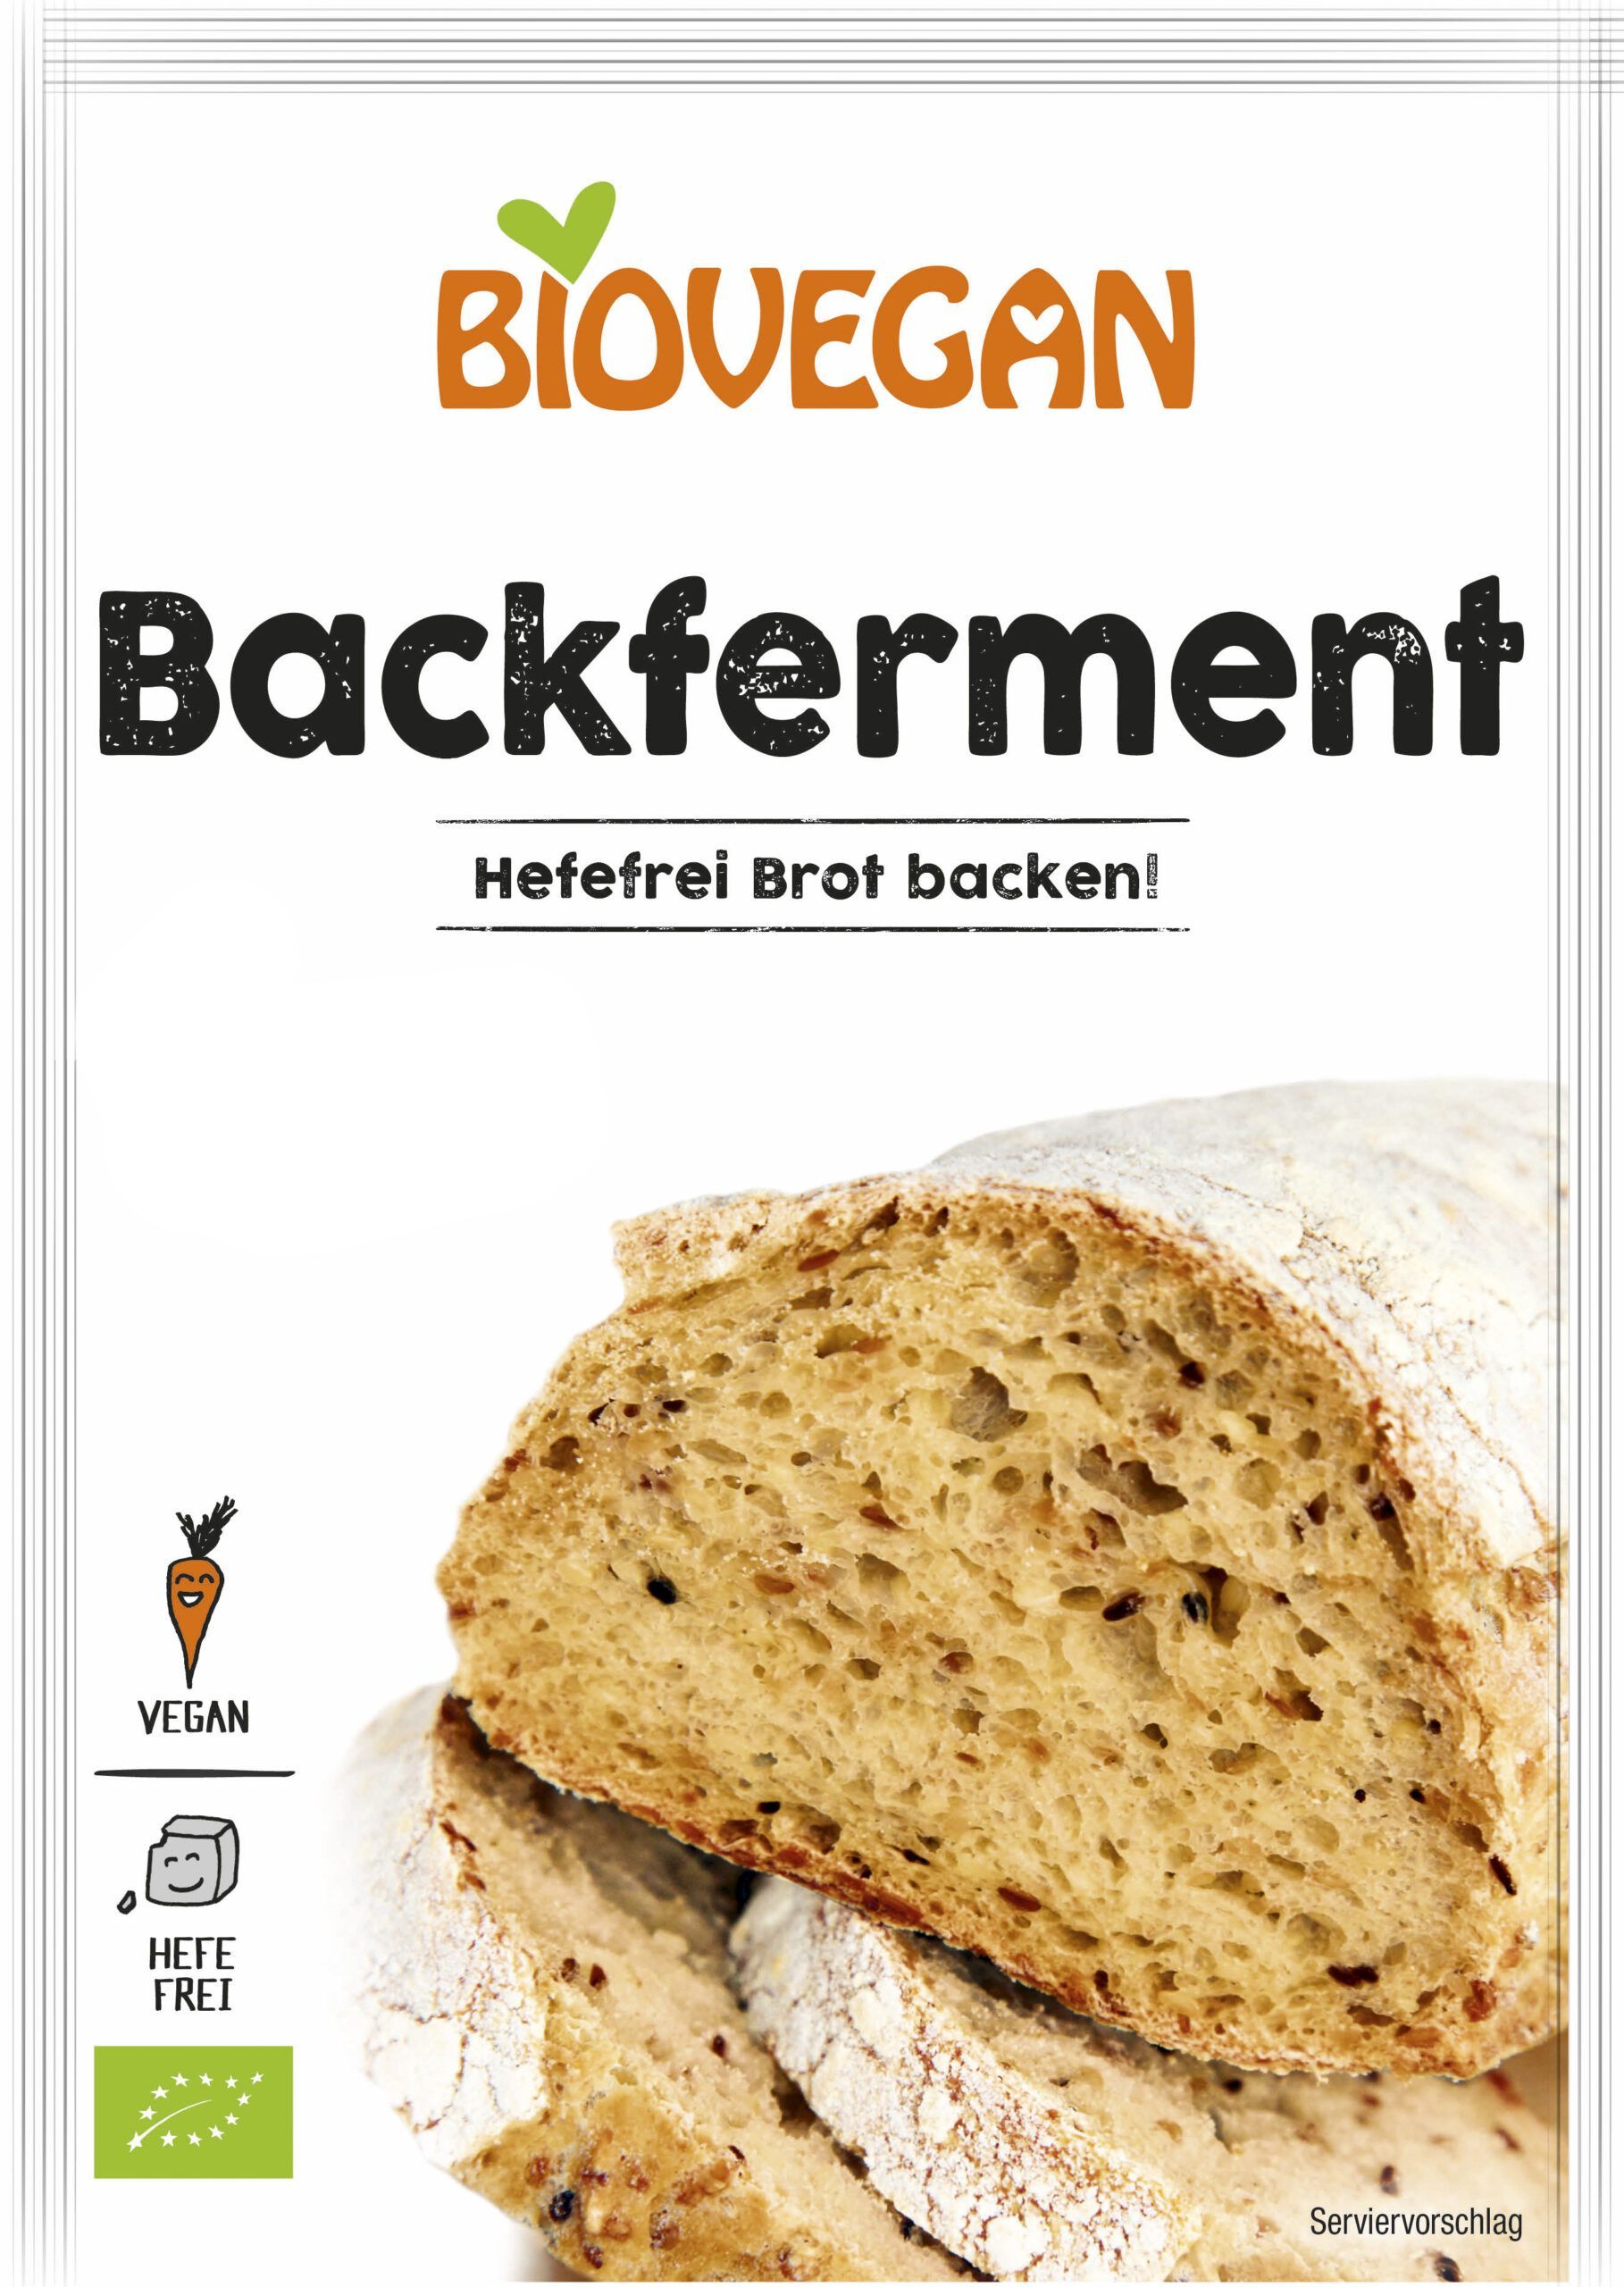 Verpackung Backferment Hefefrei Brot backen